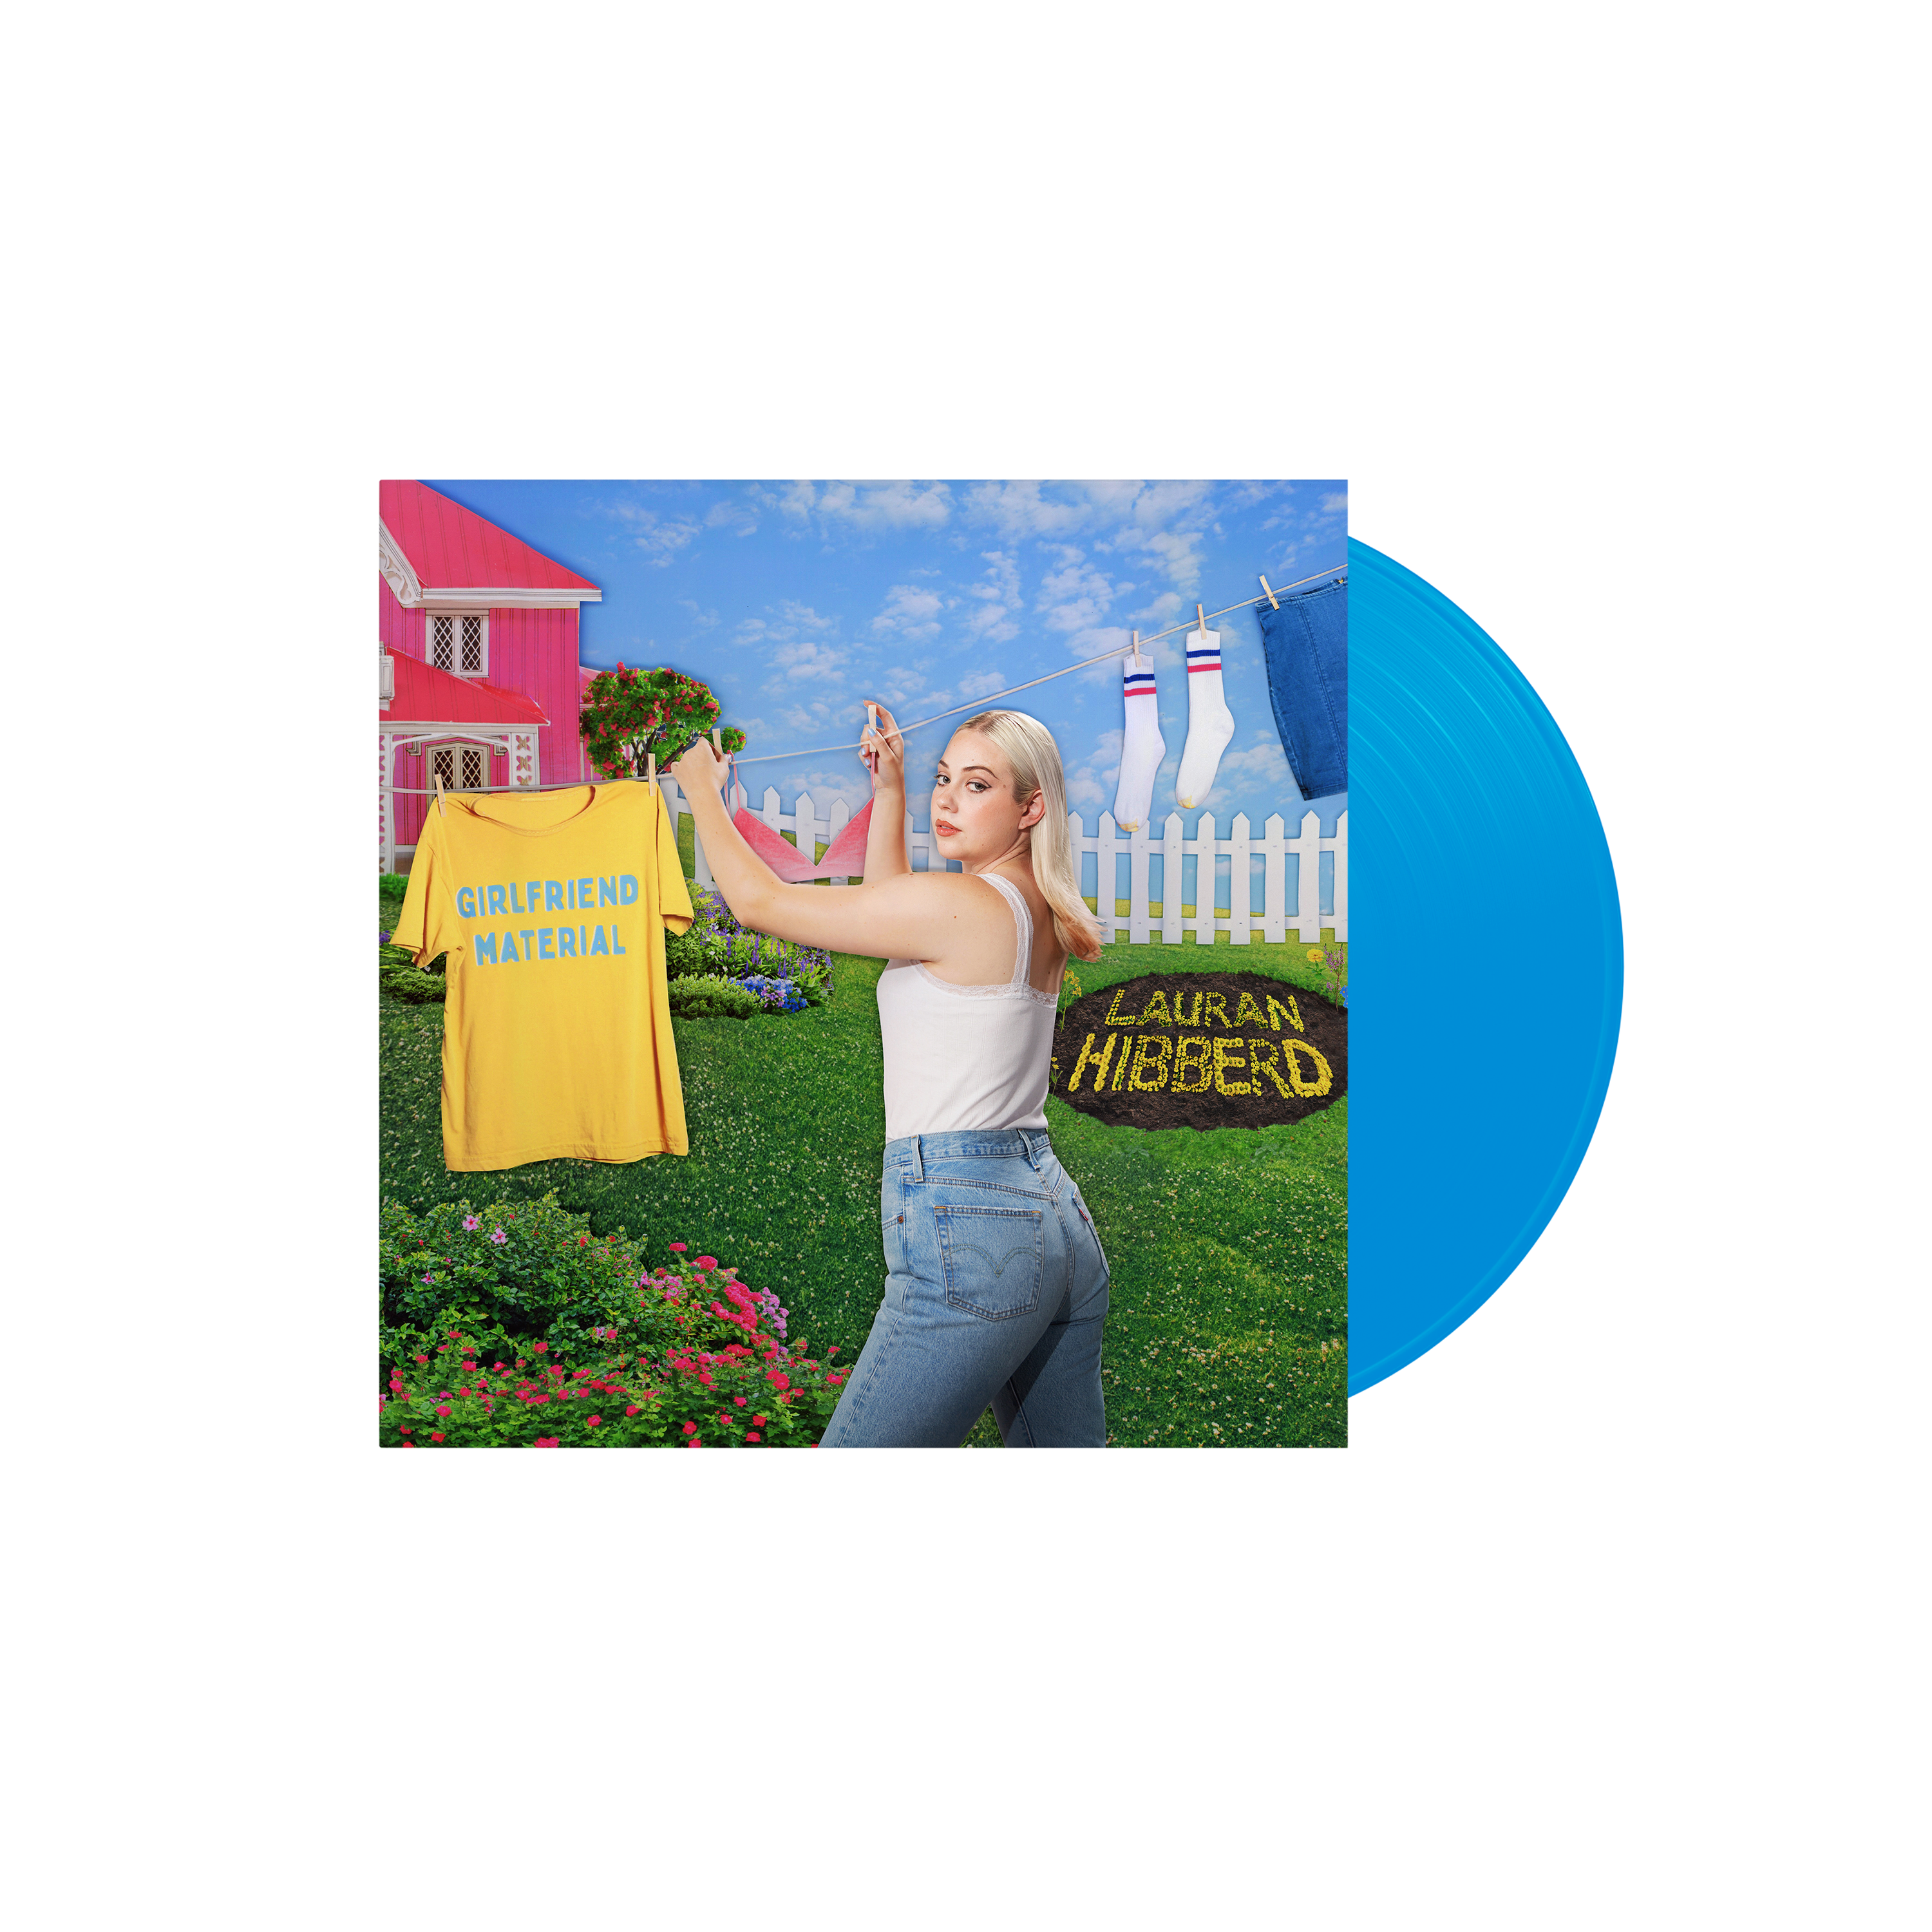 girlfriend material: Sky Blue + Clear Vinyl LP, CD, T-Shirt + Signed Print